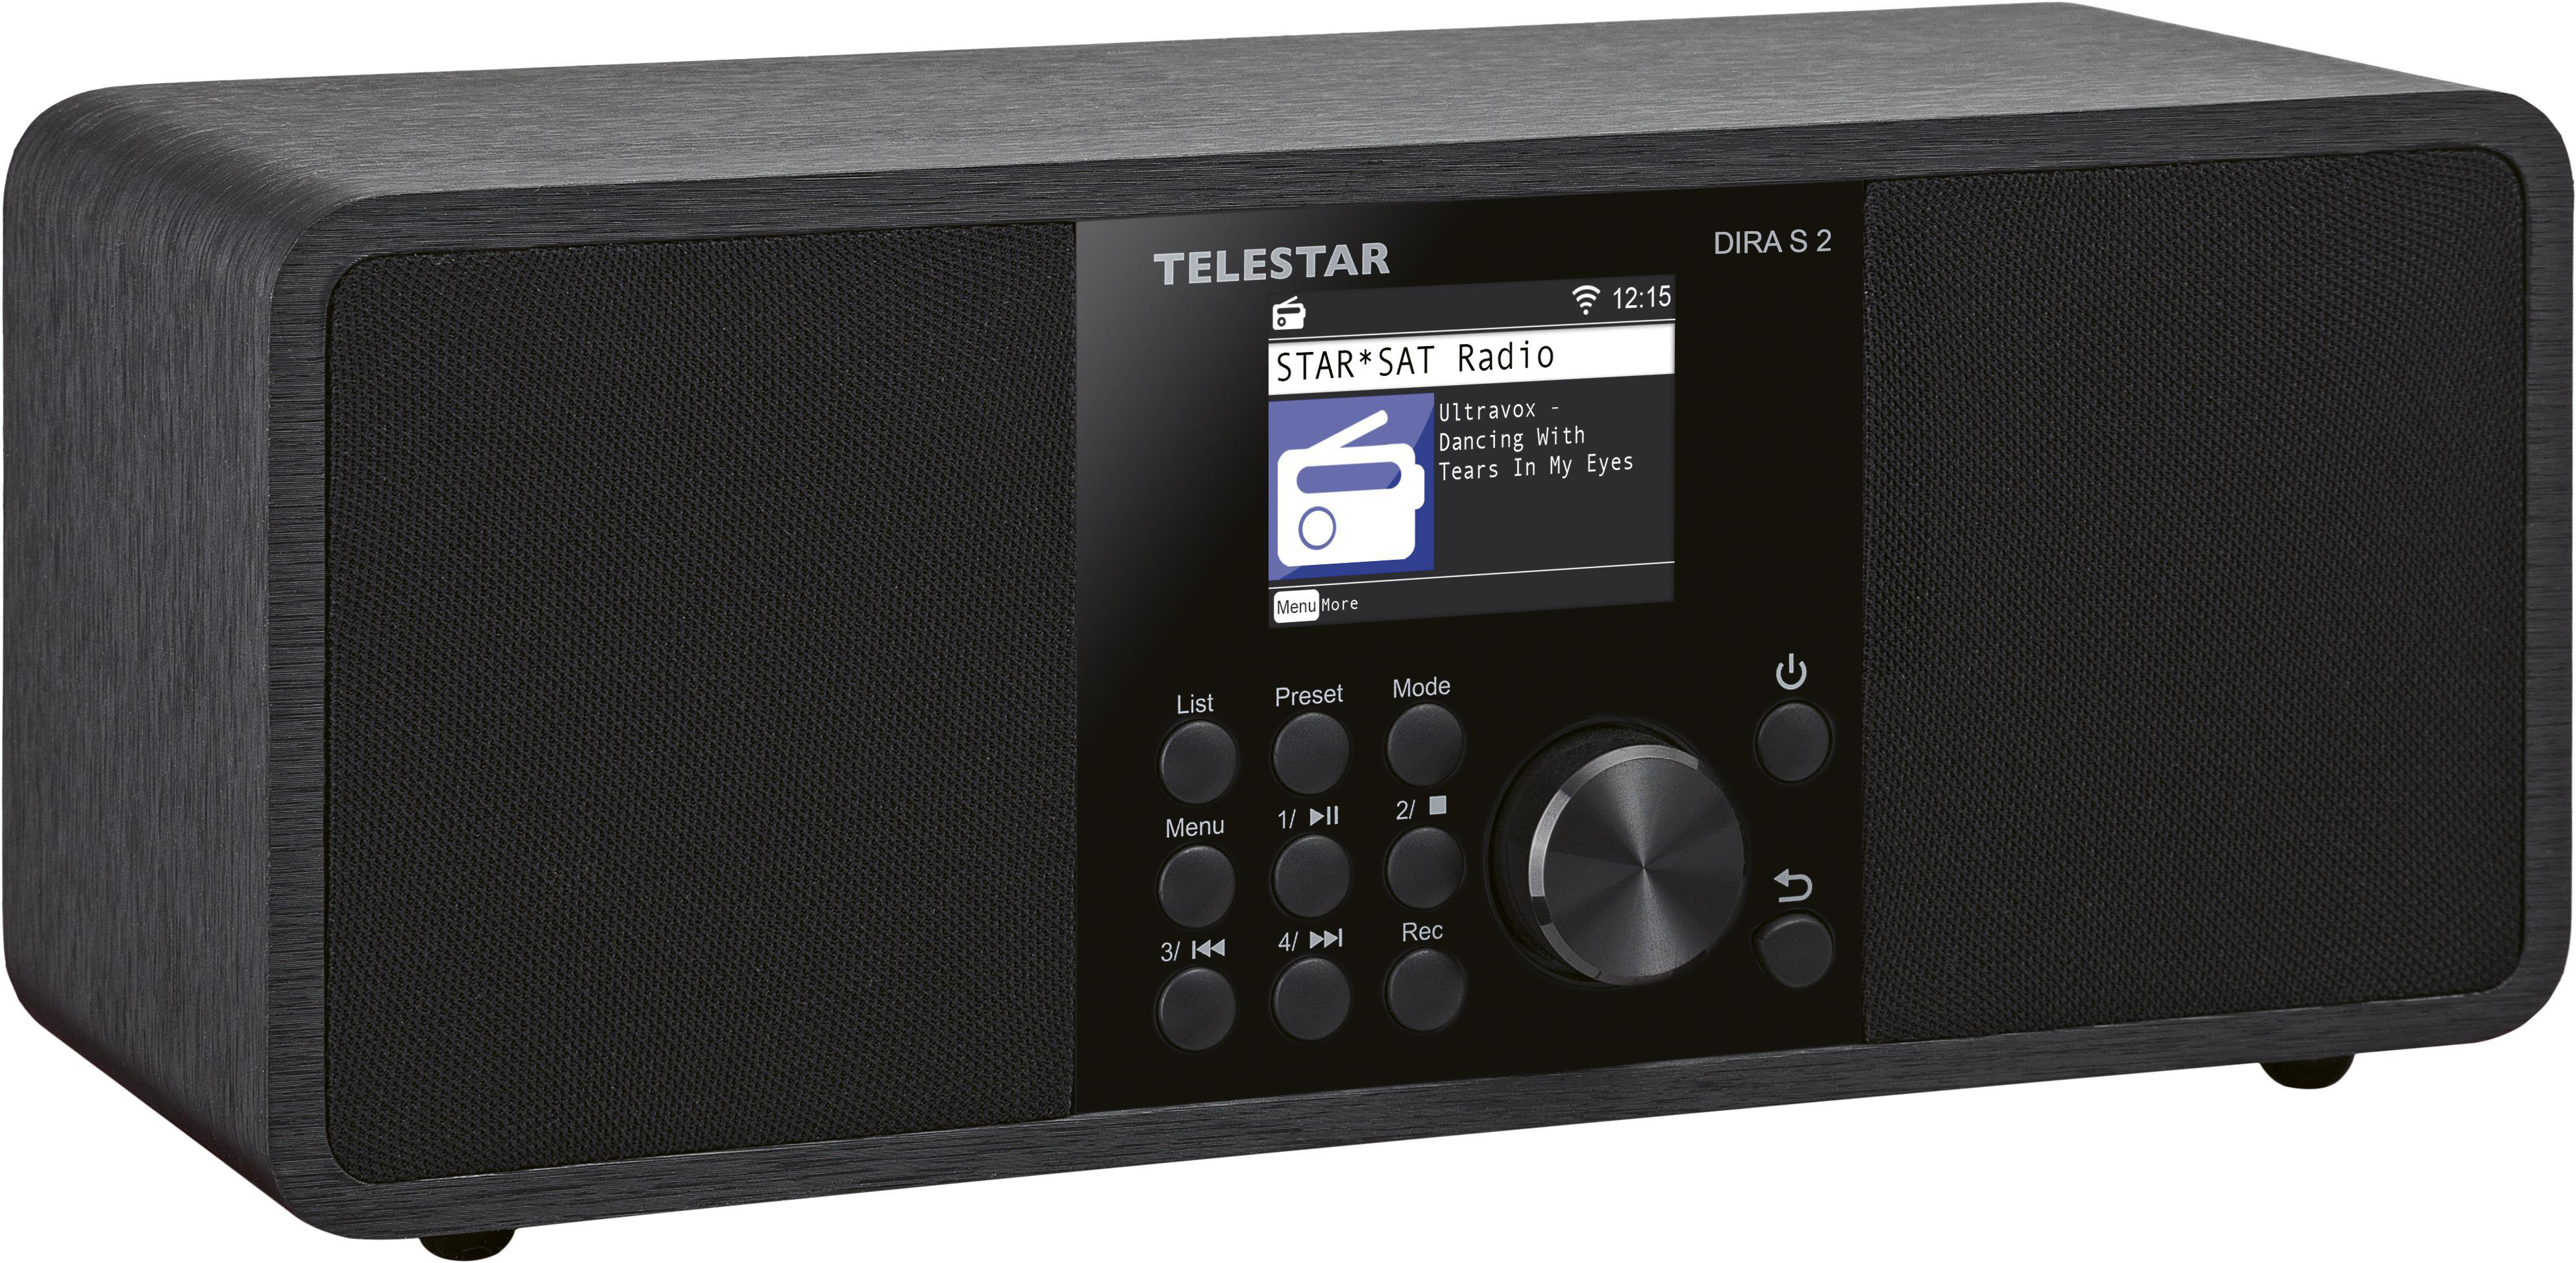 TELESTAR DIRA S 2 Internet Schwarz DAB+ Radio, DAB+, UKW, AM, DAB, DAB, Internet, FM, DAB+, Radio, Bluetooth